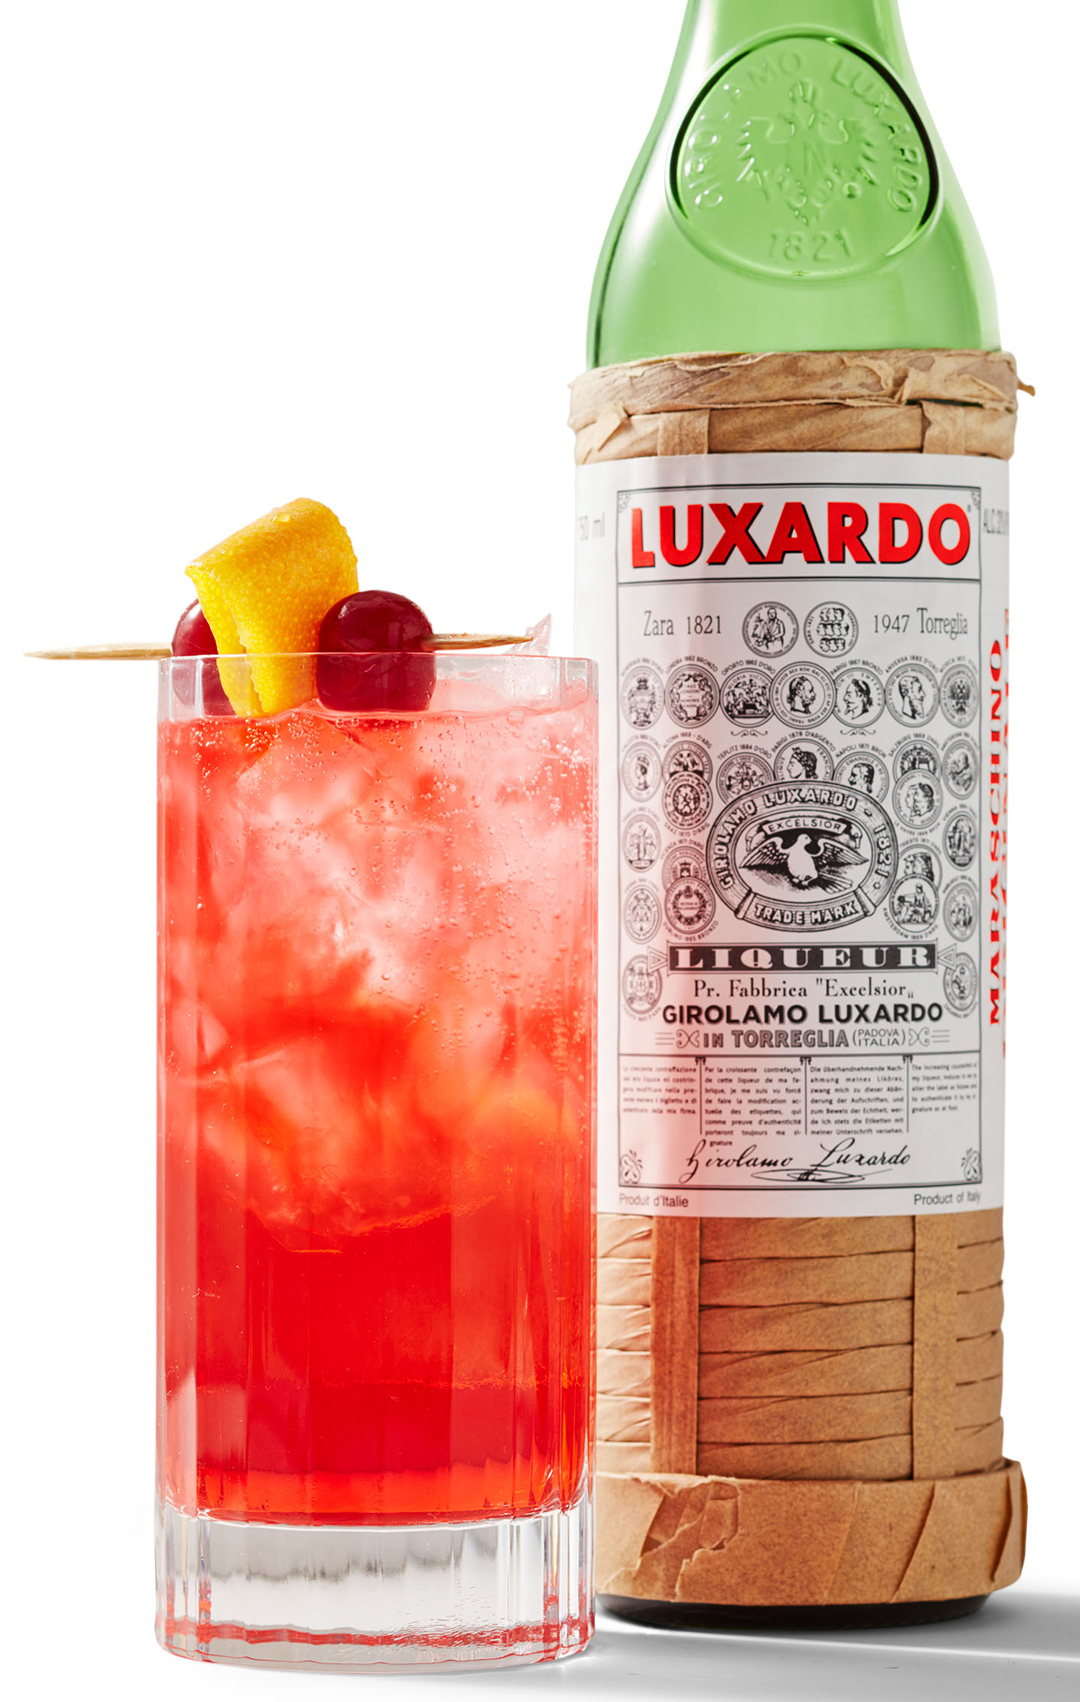 Luxardo maraschino liqueur